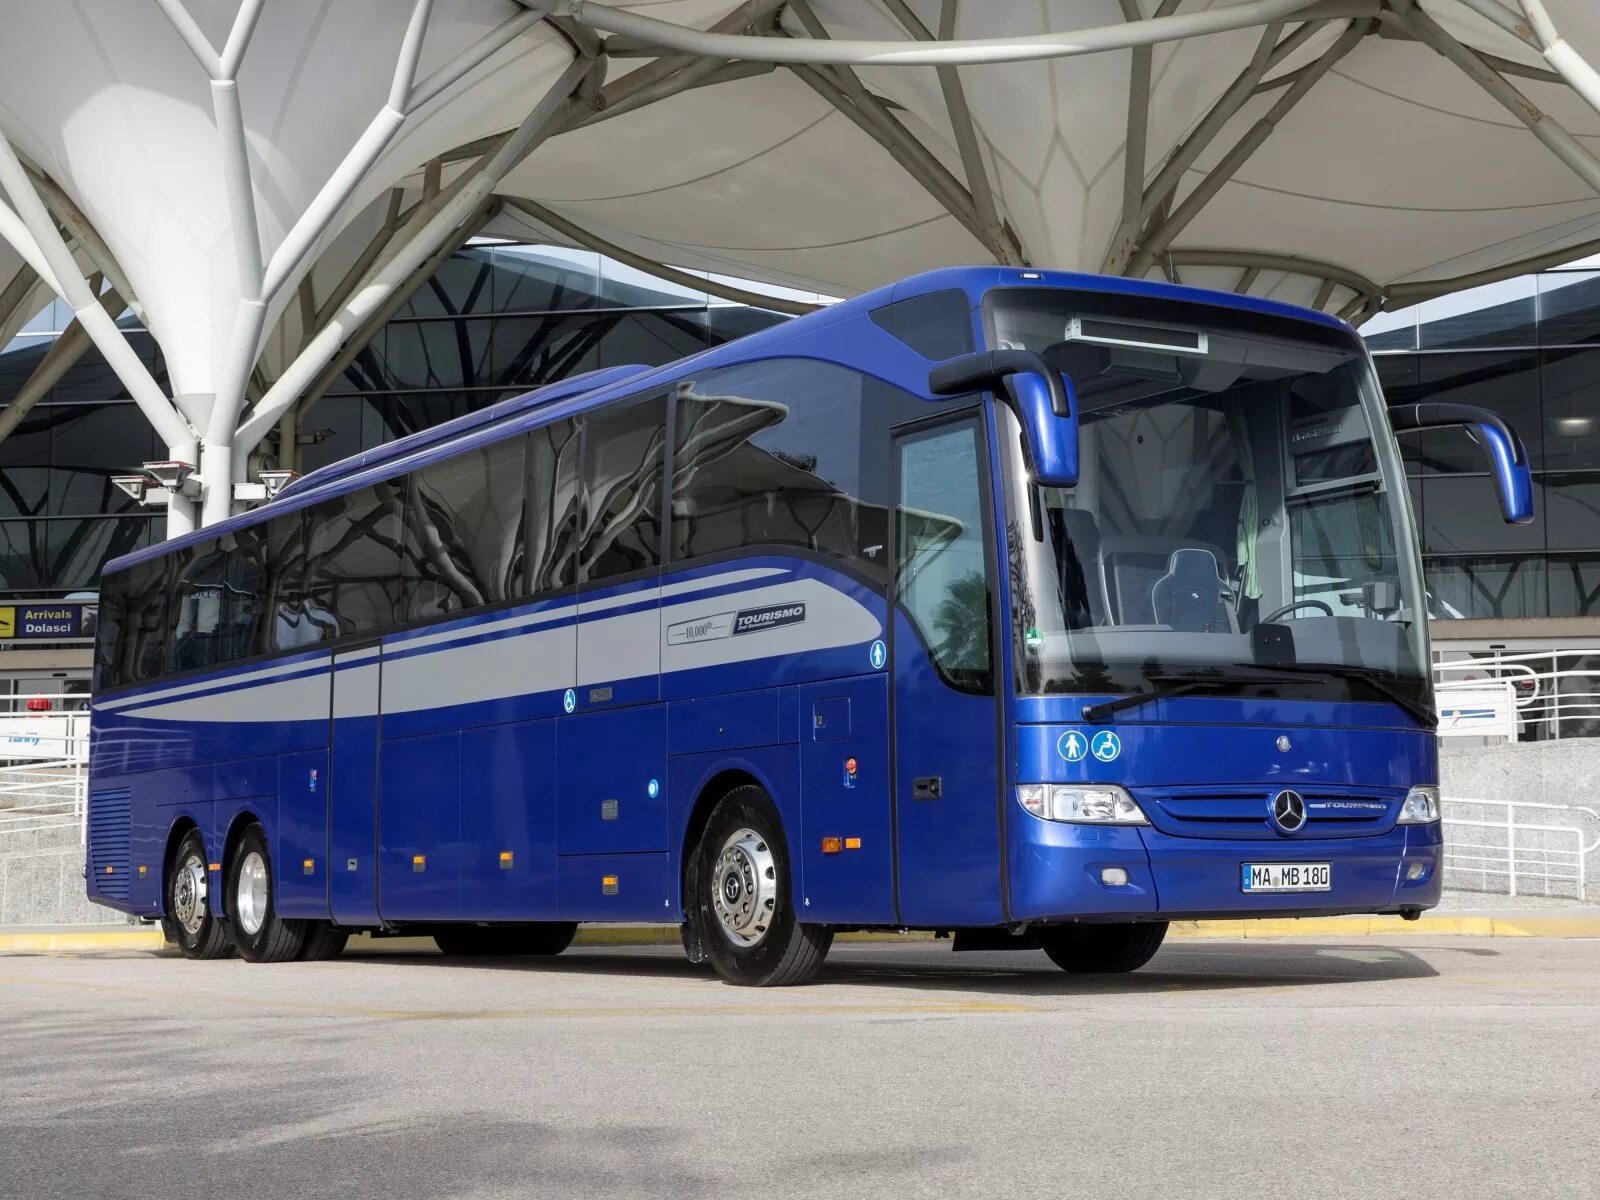 Mercedes-Benz Tourismo. КАМАЗ-5262 автобус. Mercedes-Benz Tourismo, 2016. Туристический автобус КАМАЗ.